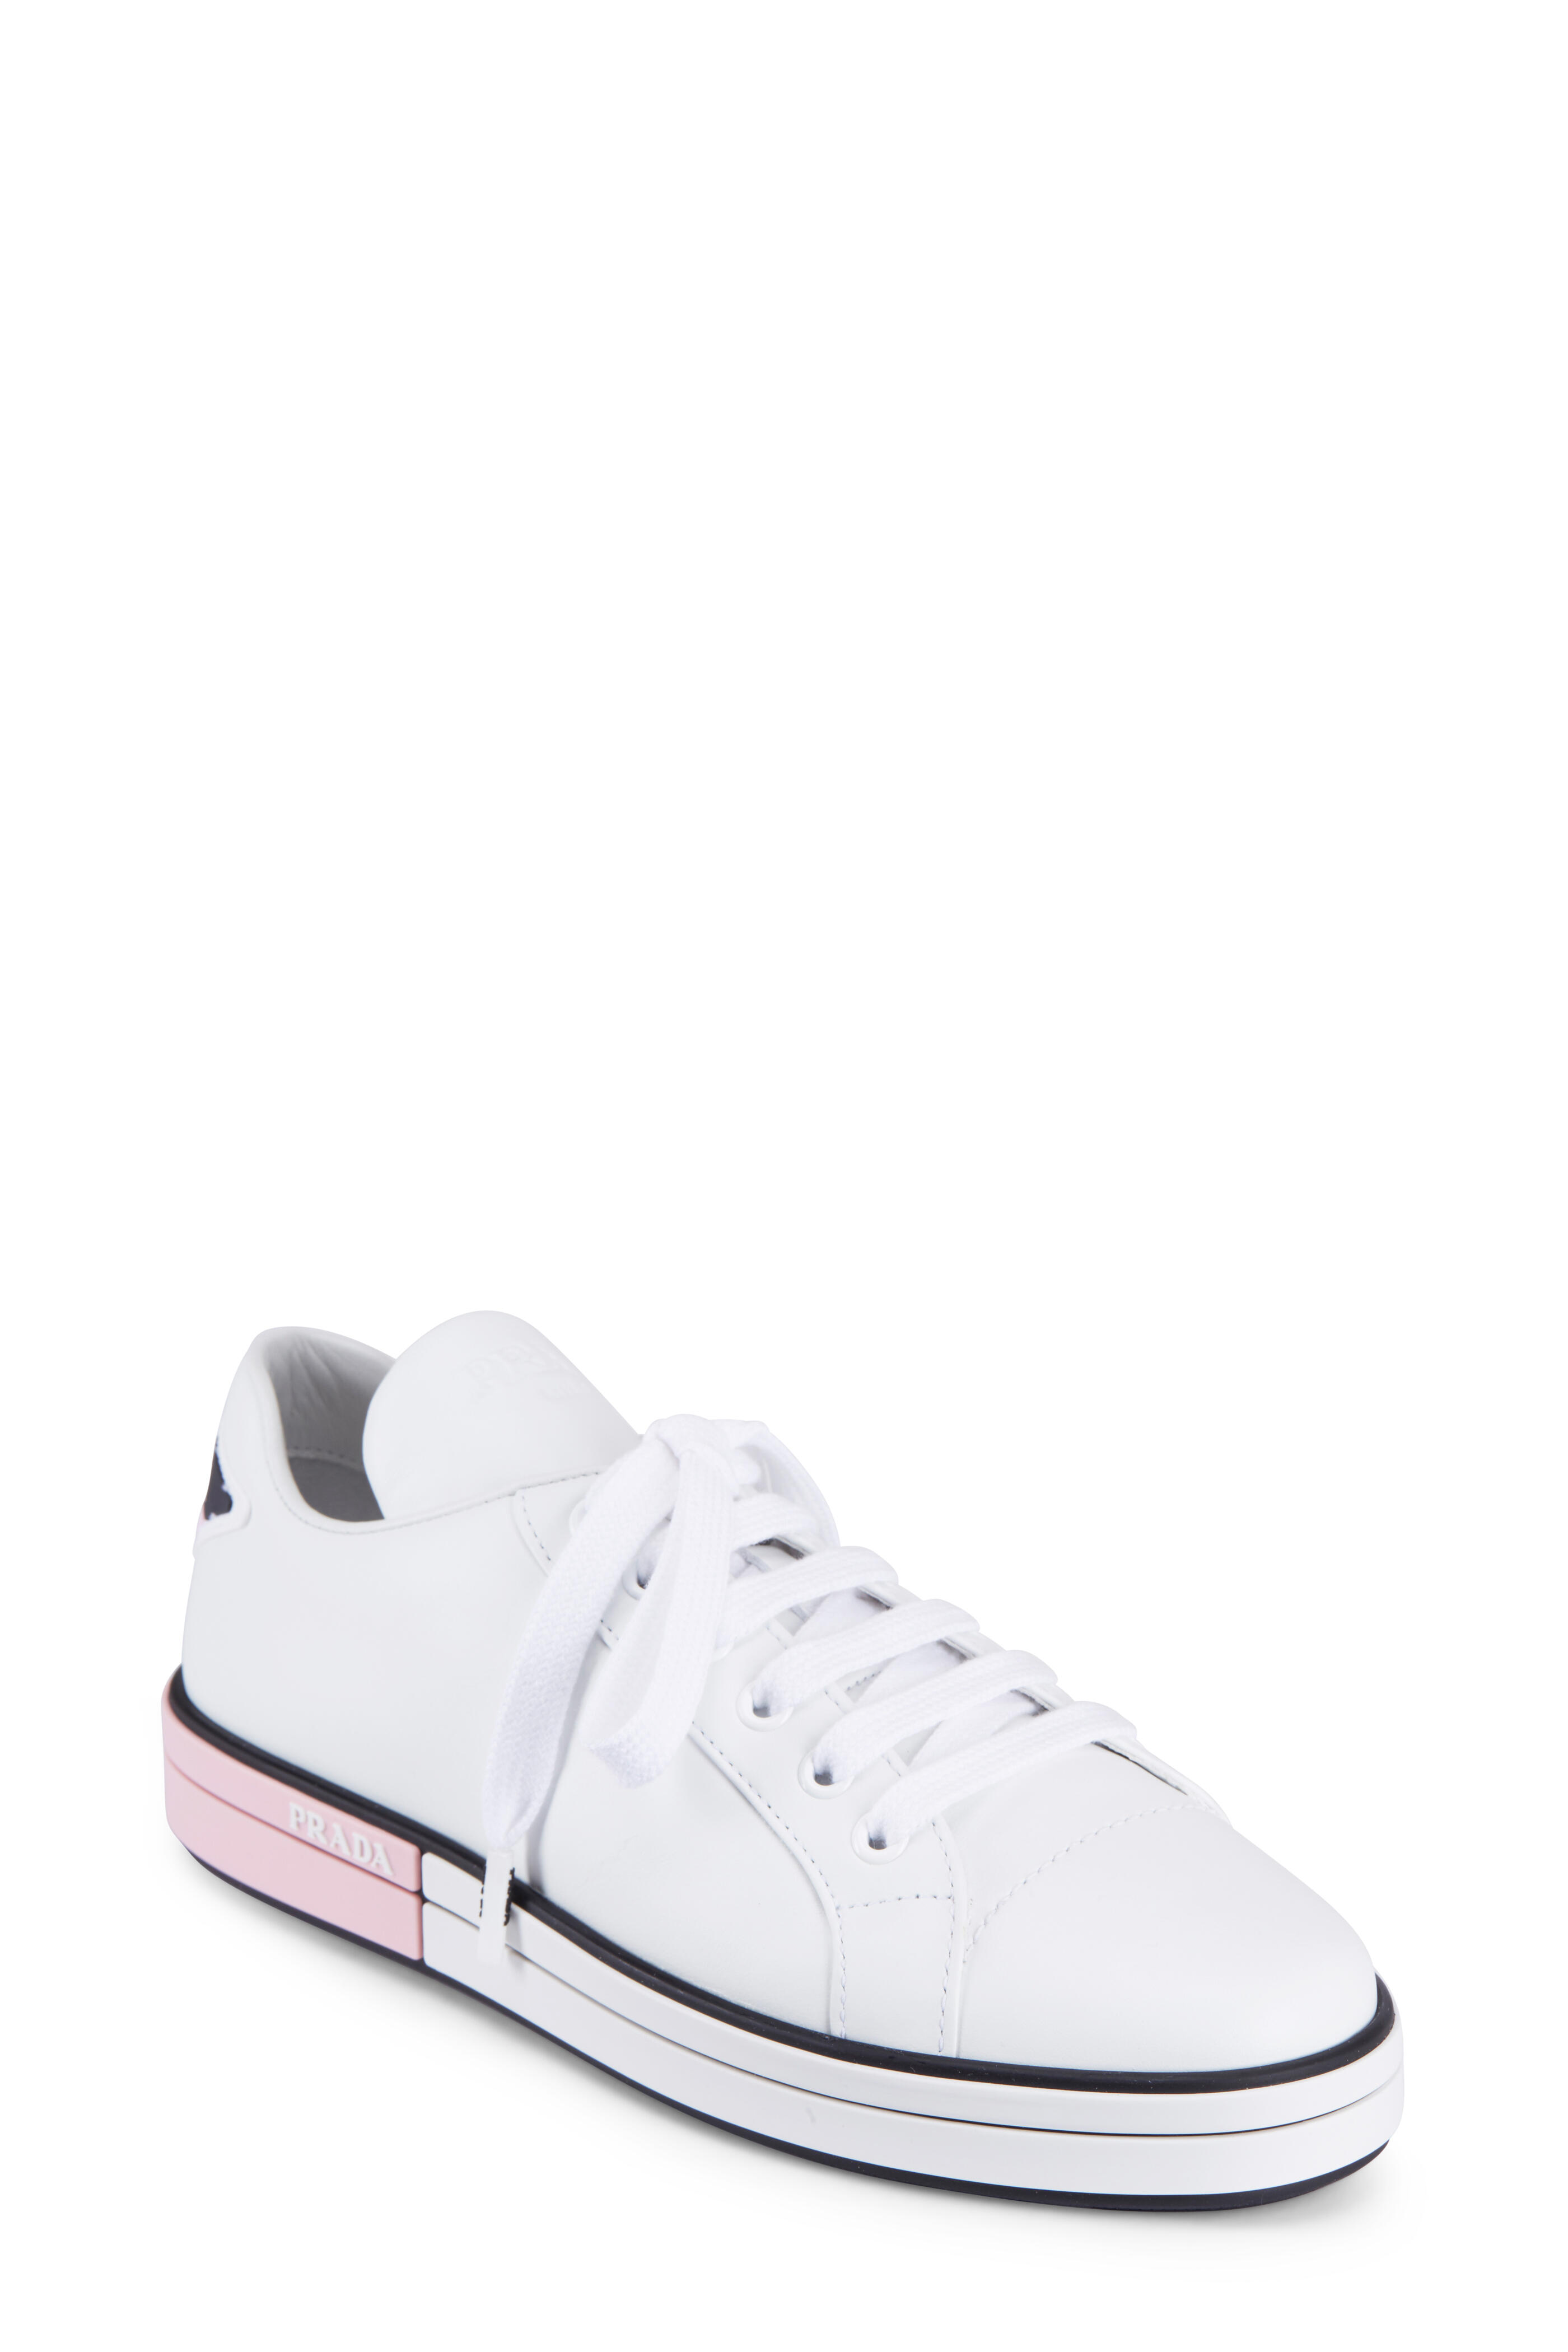 arkiv Monet Lappe Prada - White & Pink Leather Sneaker | Mitchell Stores